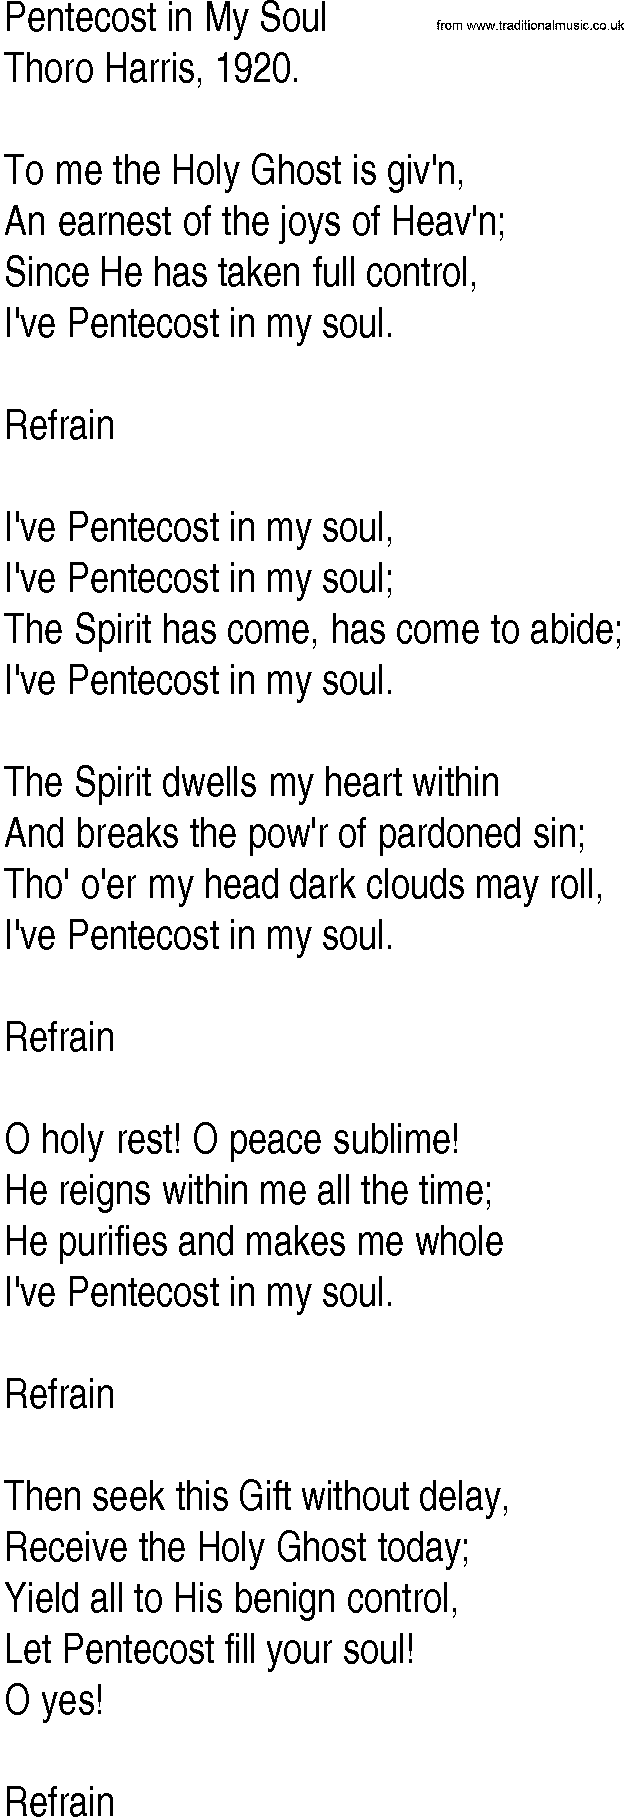 Hymn and Gospel Song: Pentecost in My Soul by Thoro Harris lyrics